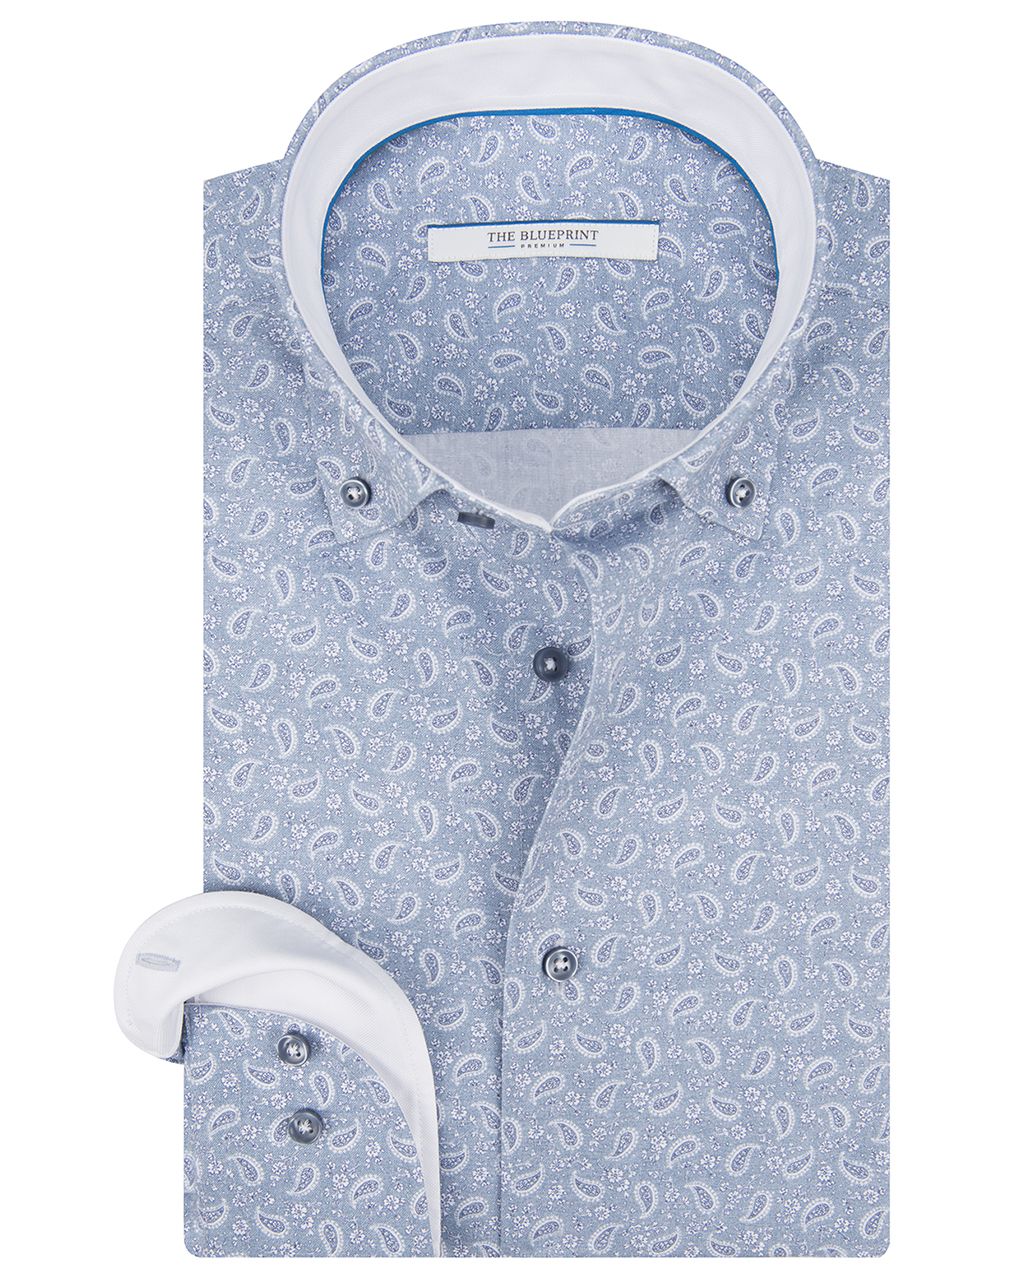 The BLUEPRINT Premium Trendy overhemd LM Blauw print 061899-001-L